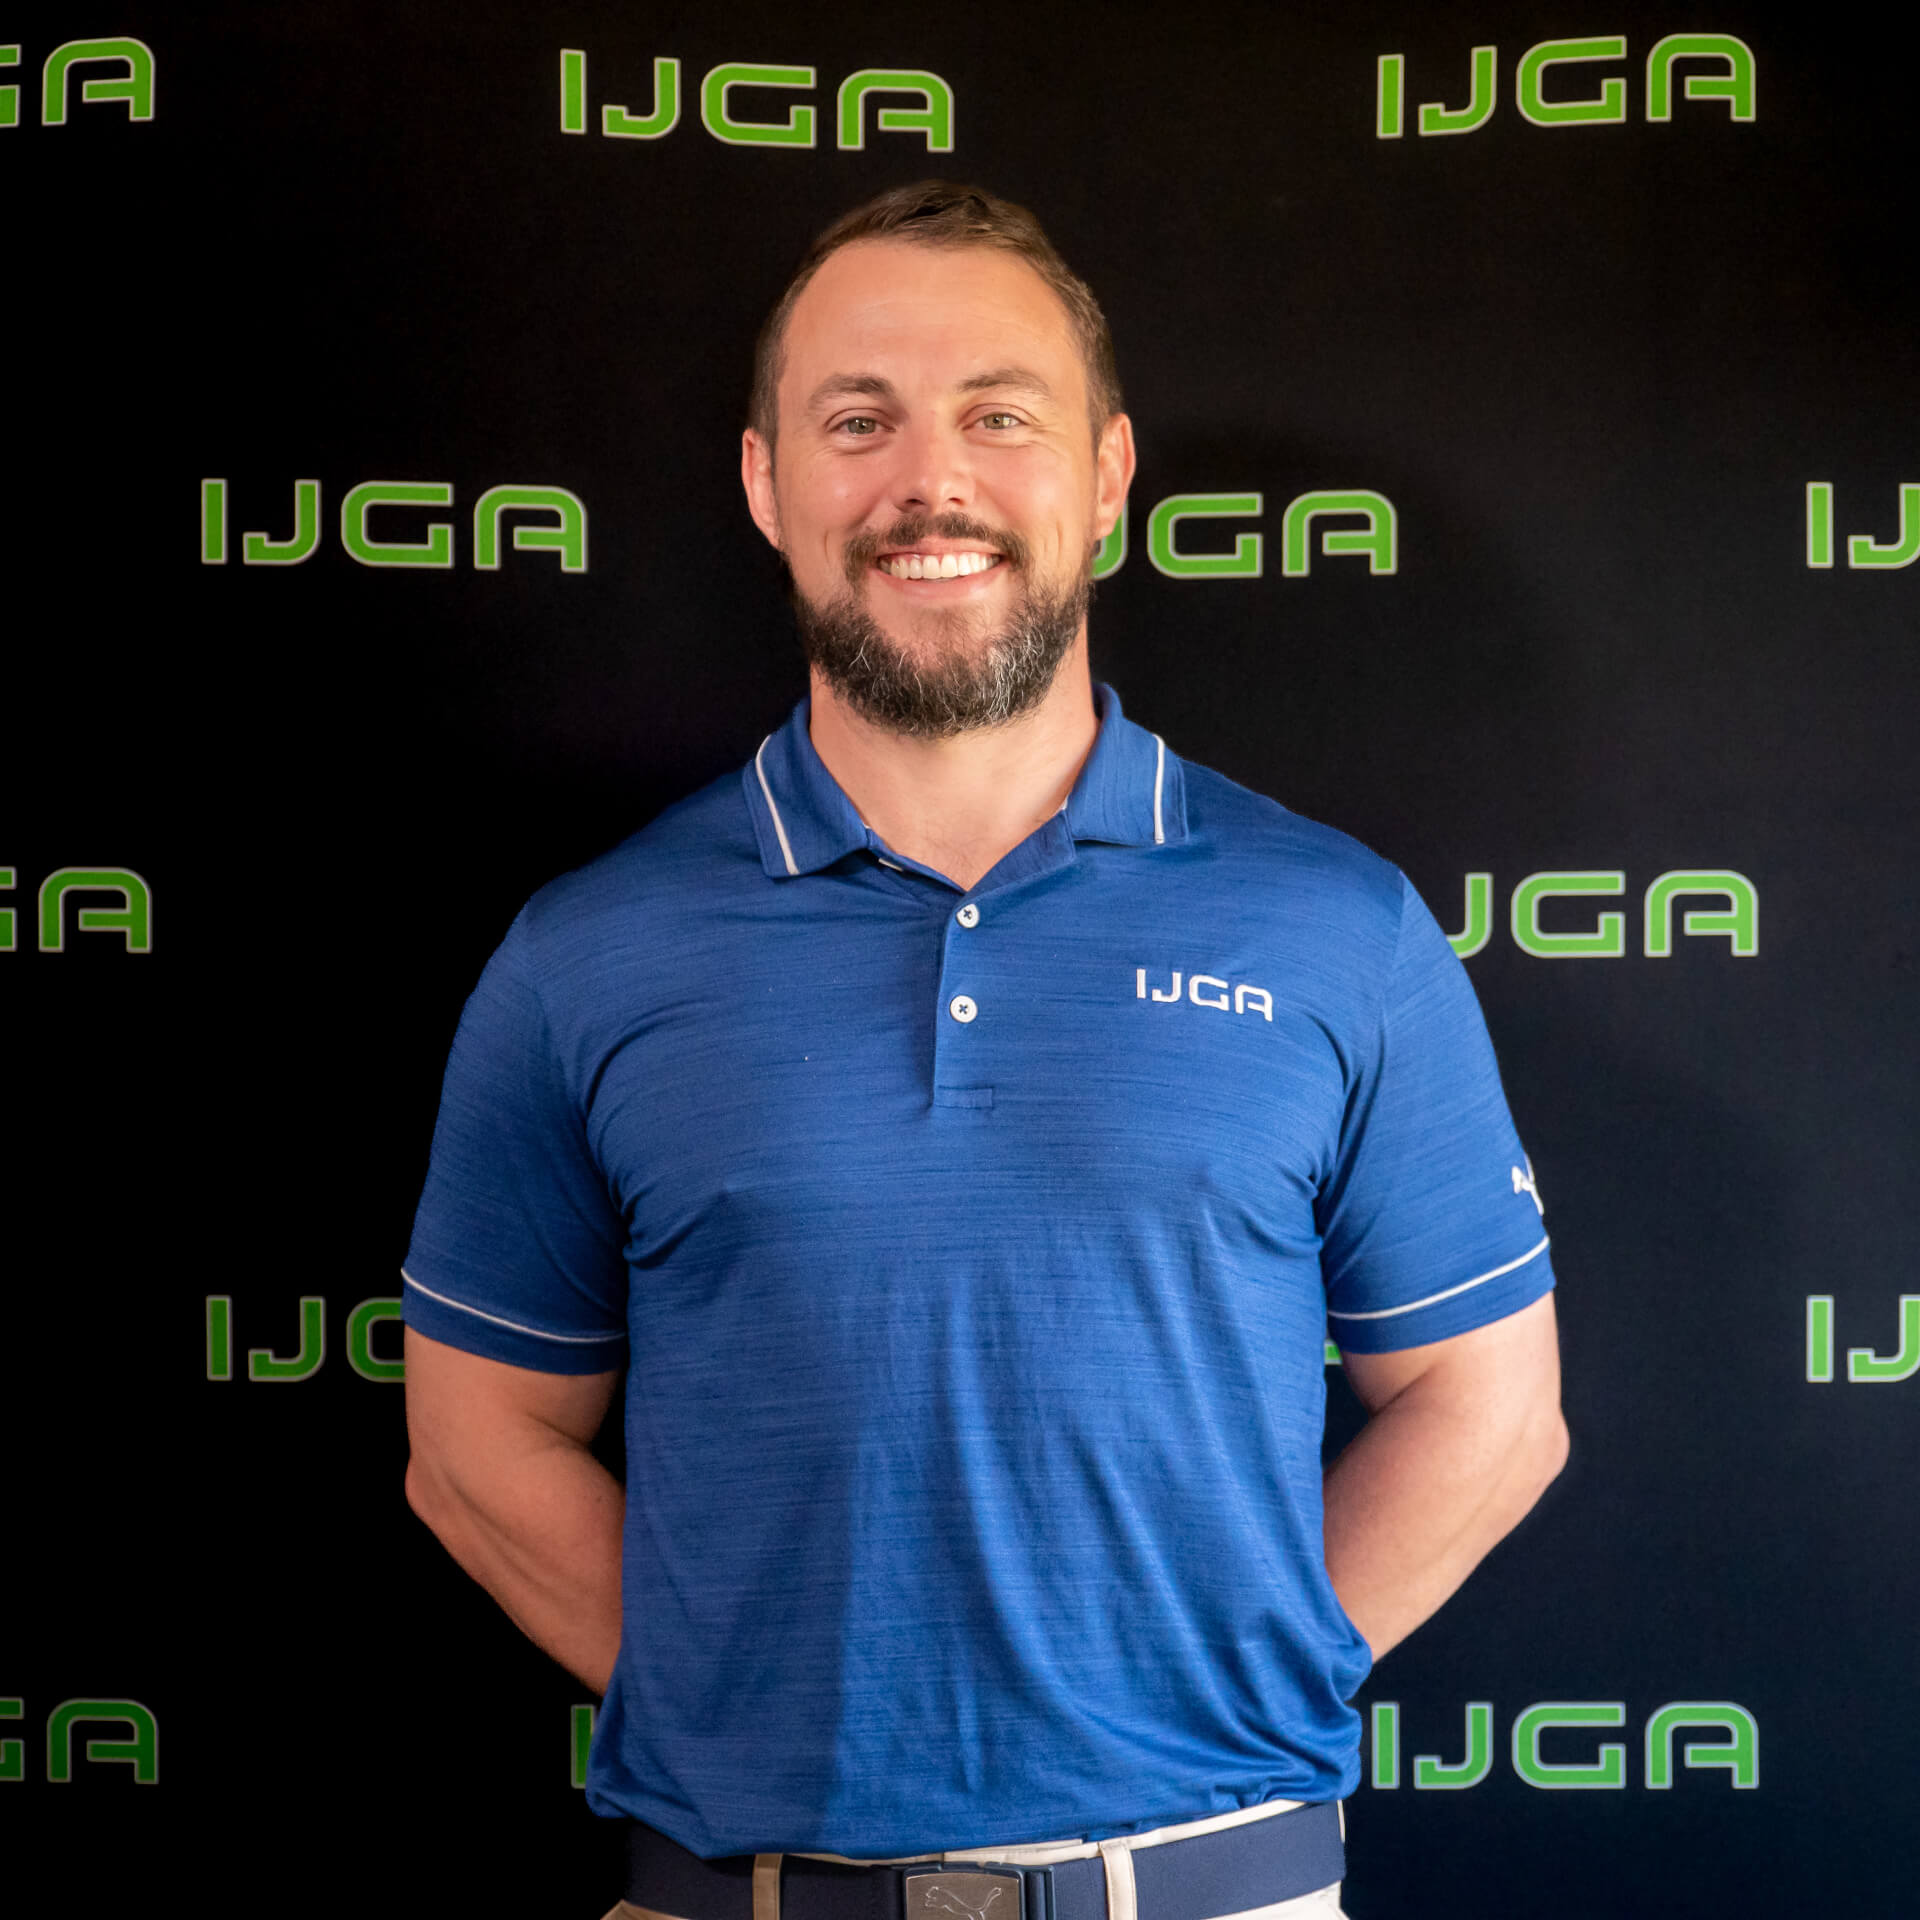 IJGA coach Sebastian Brown, smiles against a black IJGA logo background